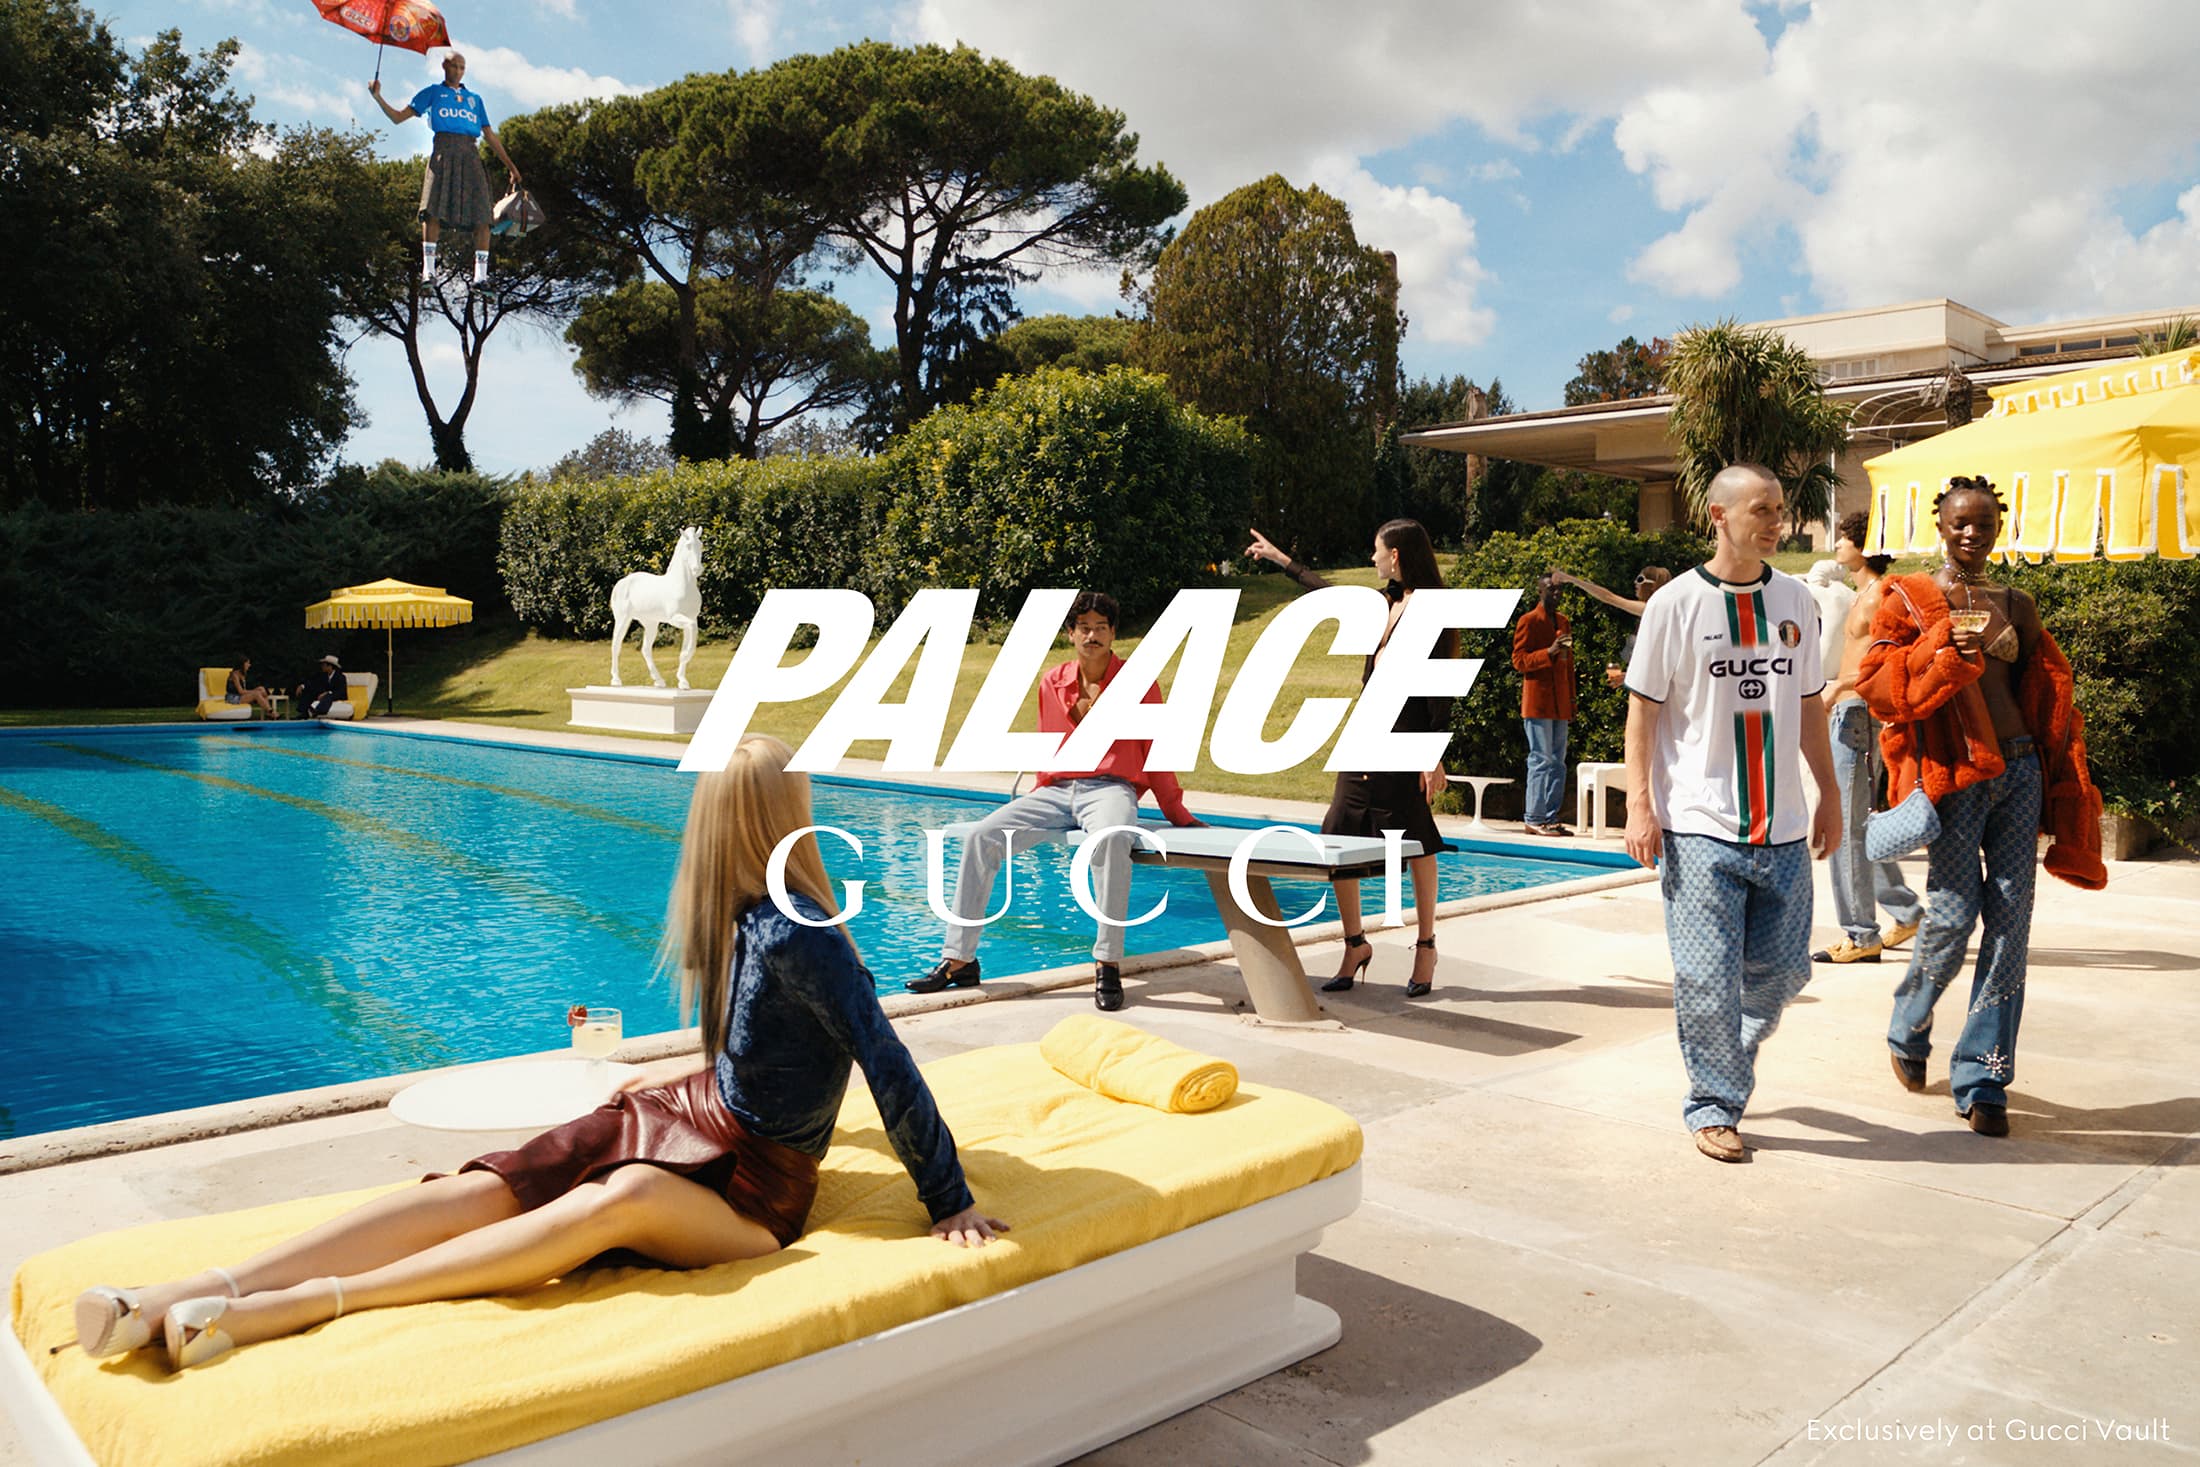 Top 10 ad Campaigns Fall 2022 image of Gucci ad campaign